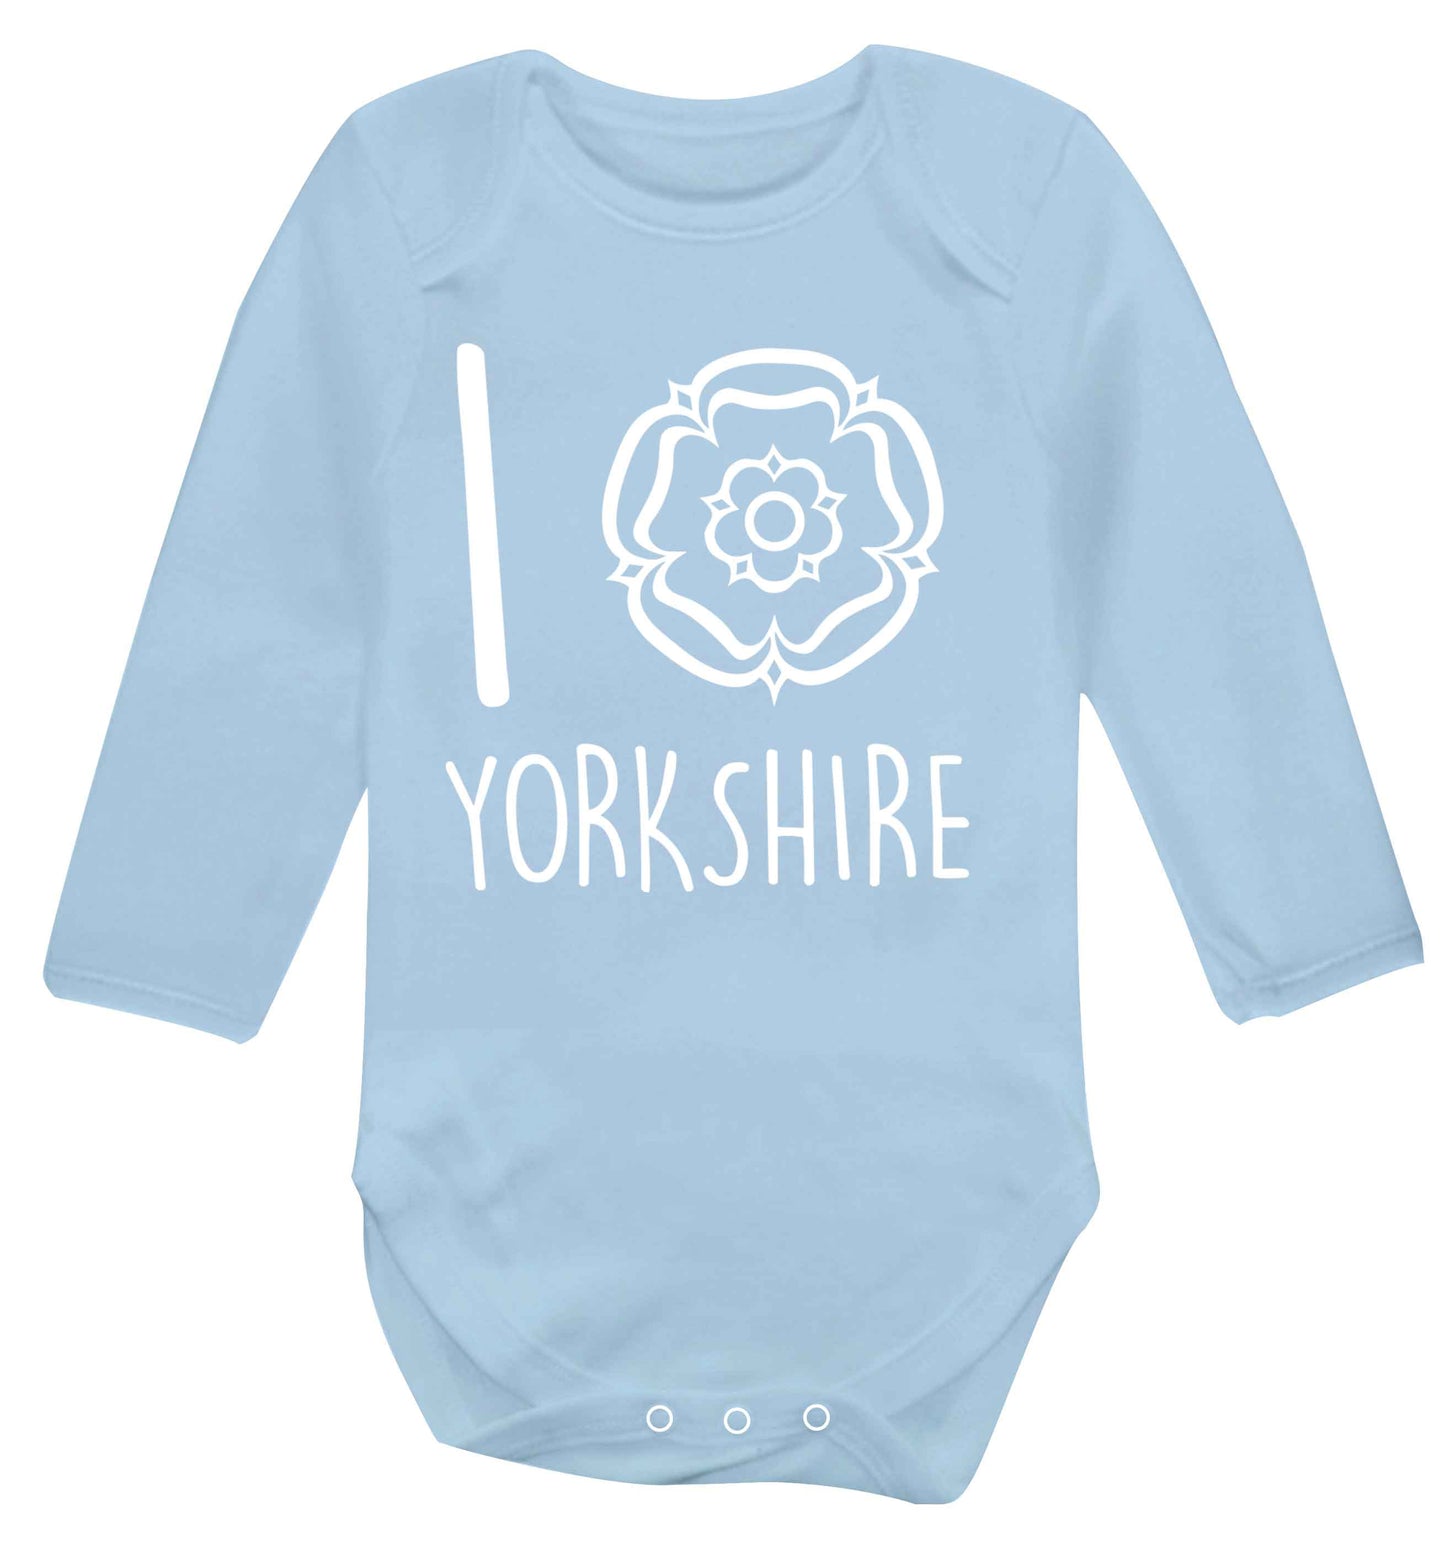 I love Yorkshire Baby Vest long sleeved pale blue 6-12 months